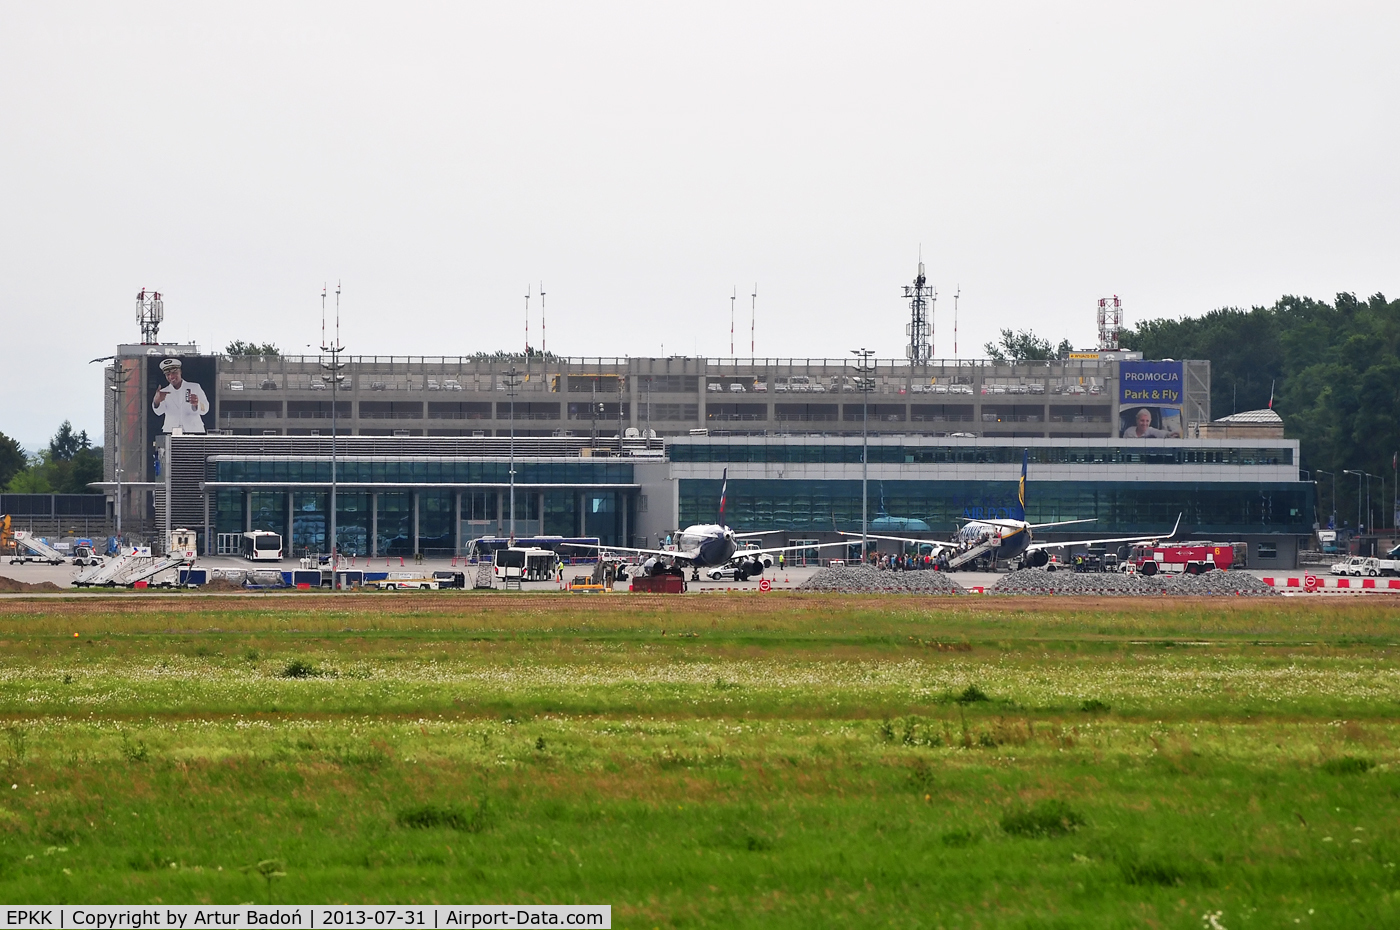 John Paul II International Airport Kraków-Balice, Kraków Poland (EPKK) - Terminal